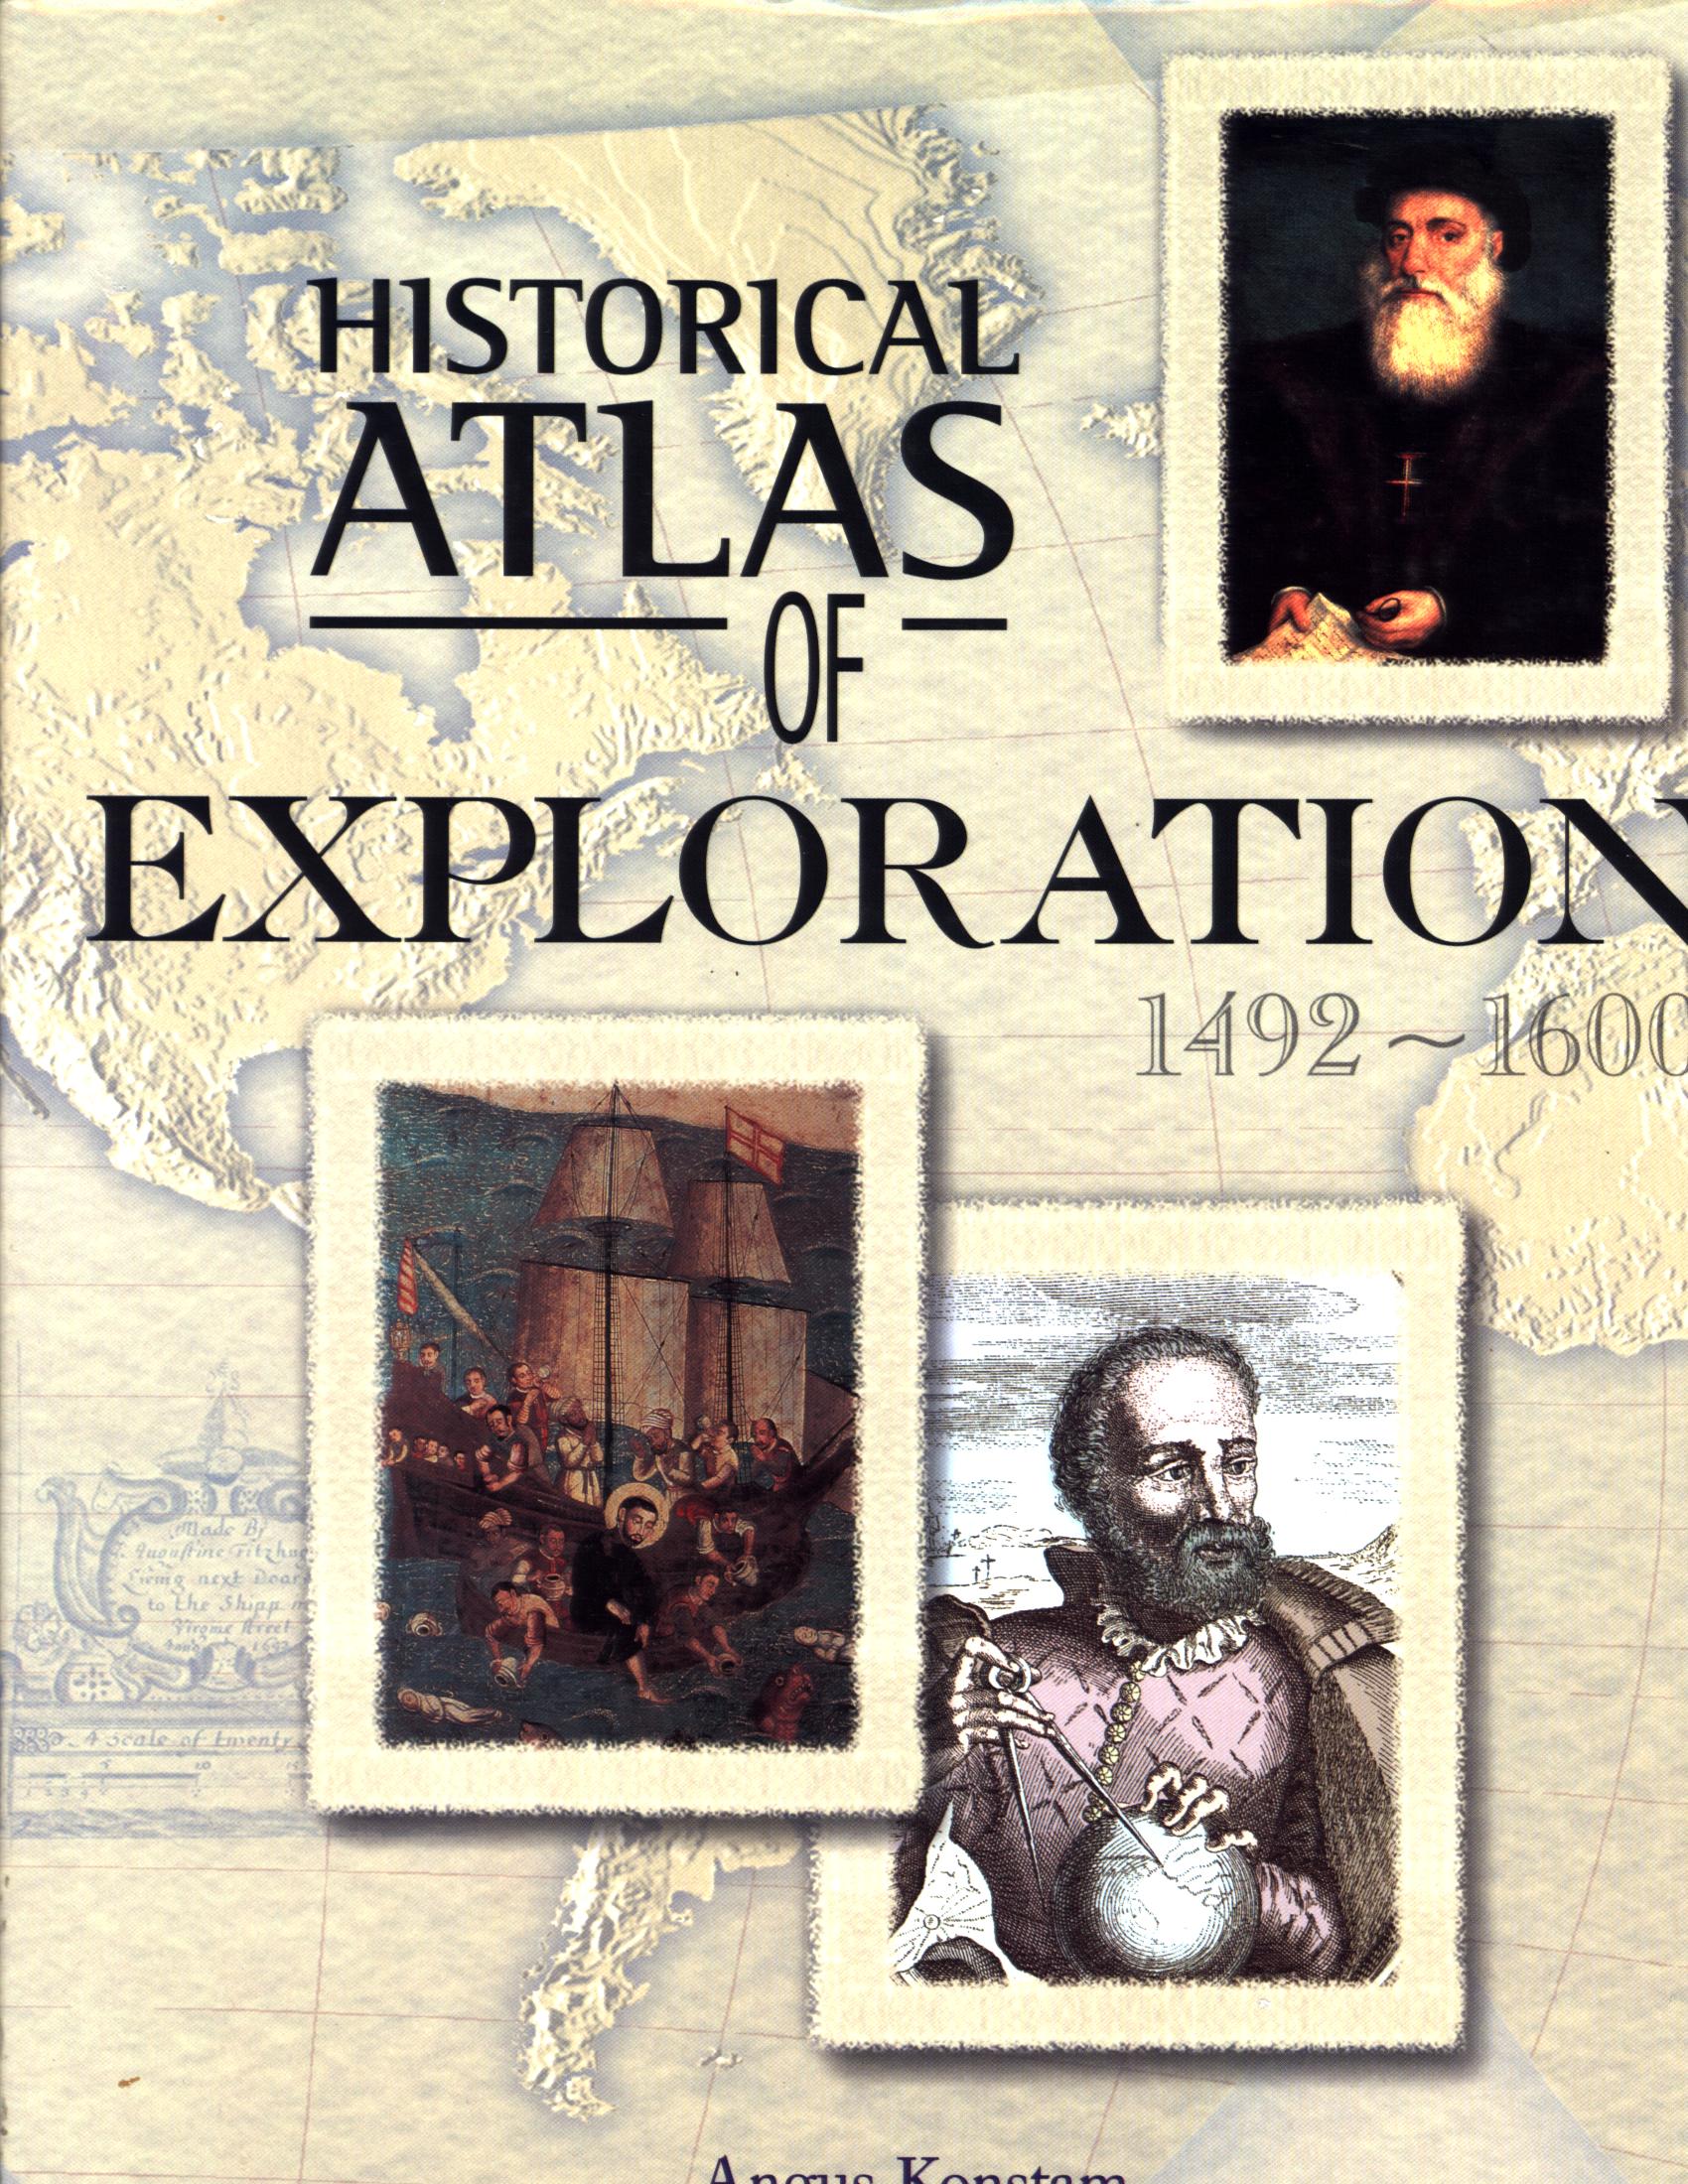 HISTORICAL ATLAS OF EXPLORATION: 1492-1600. 